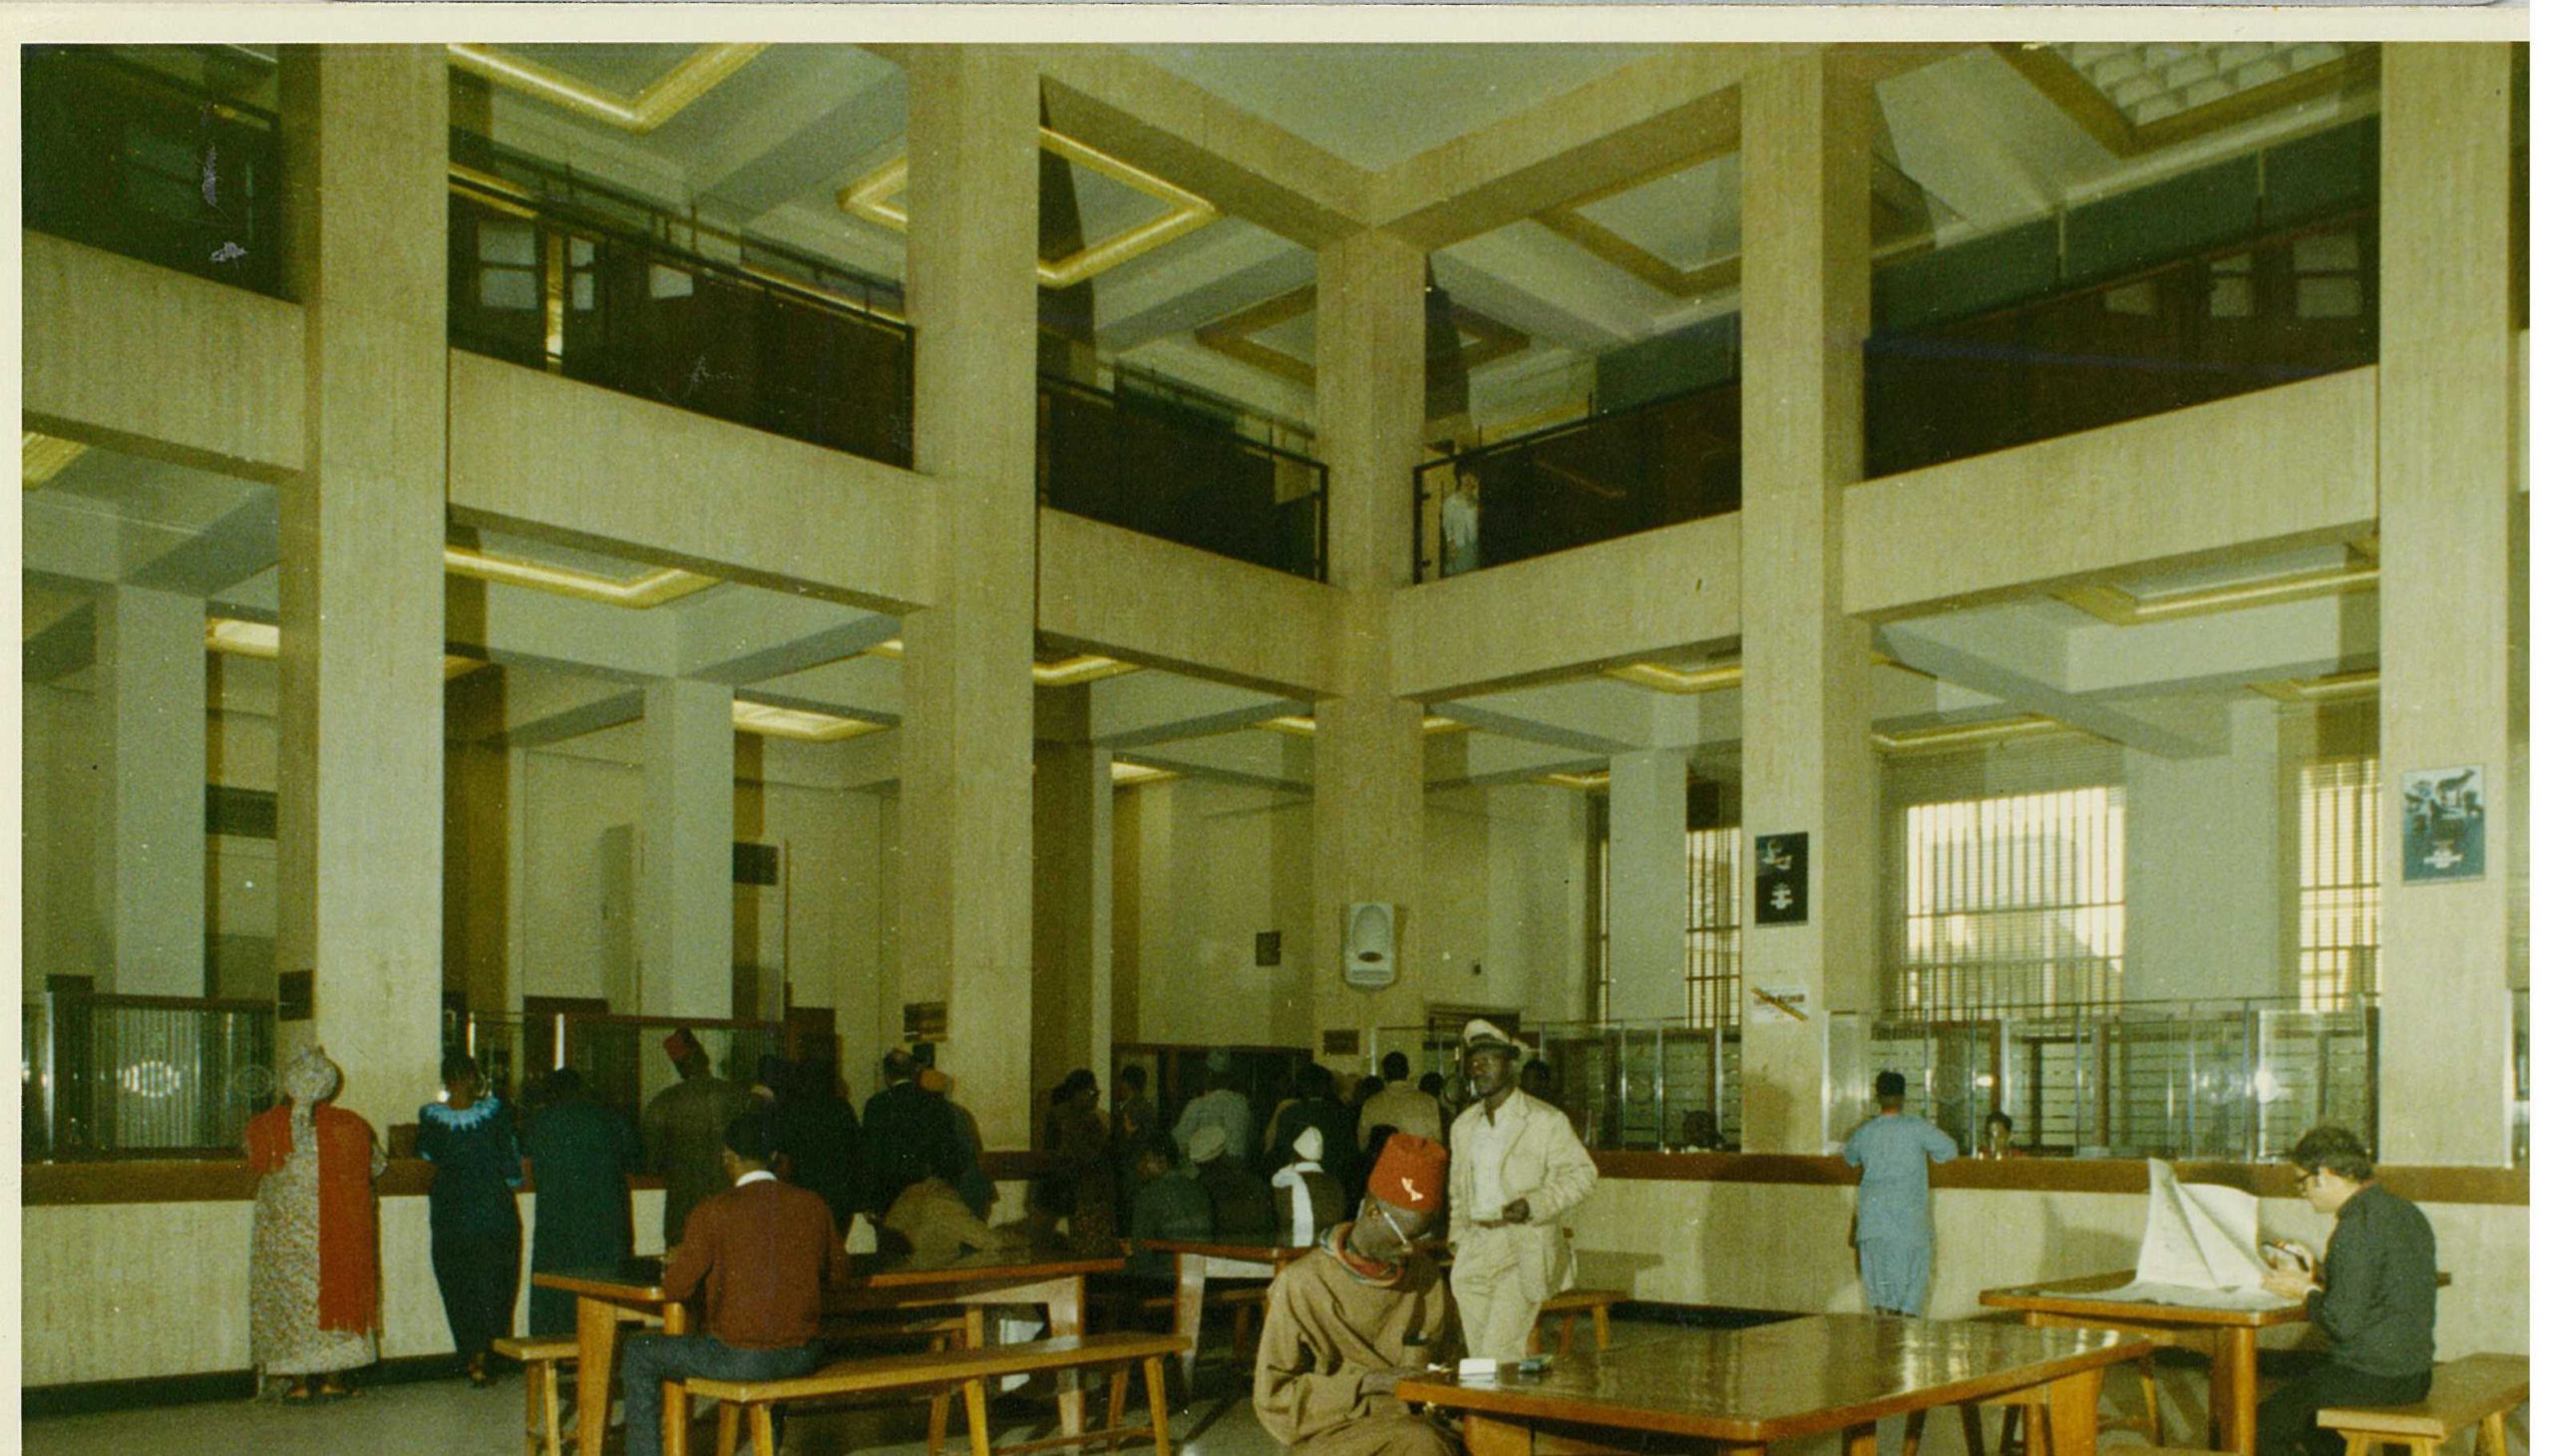 Major branch of the BICI Senegal in Dakar, 1971- BNP Paribas Historical Collections